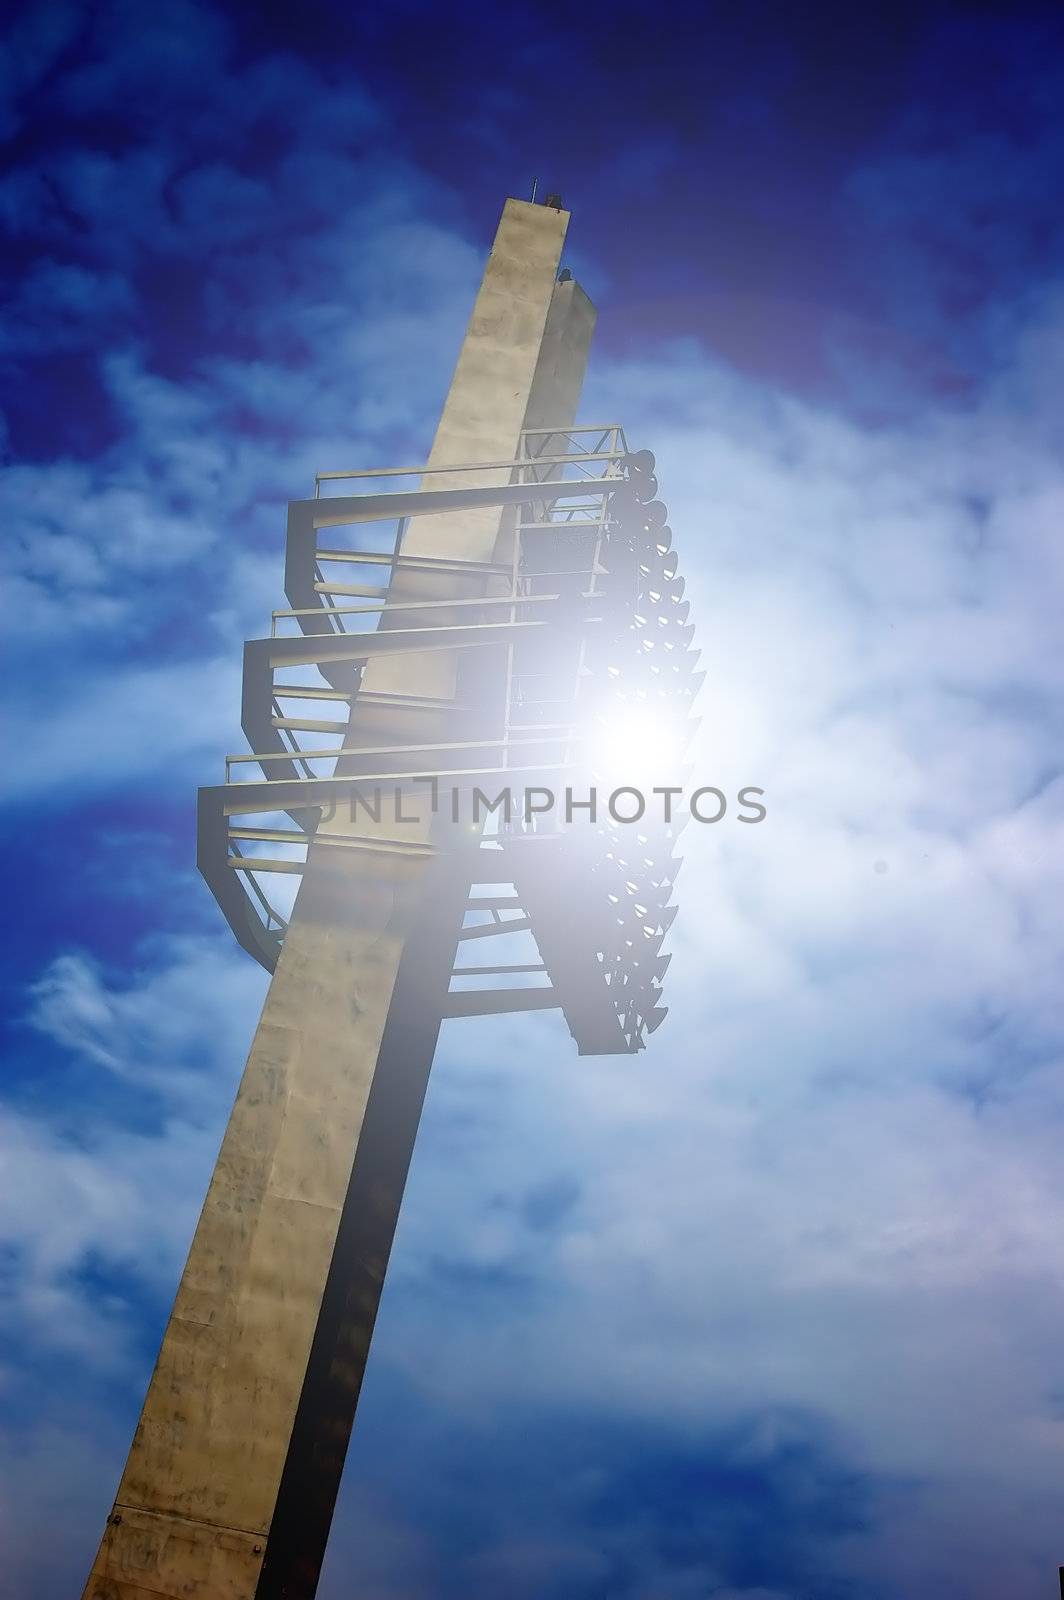 Stadium light by photocreo